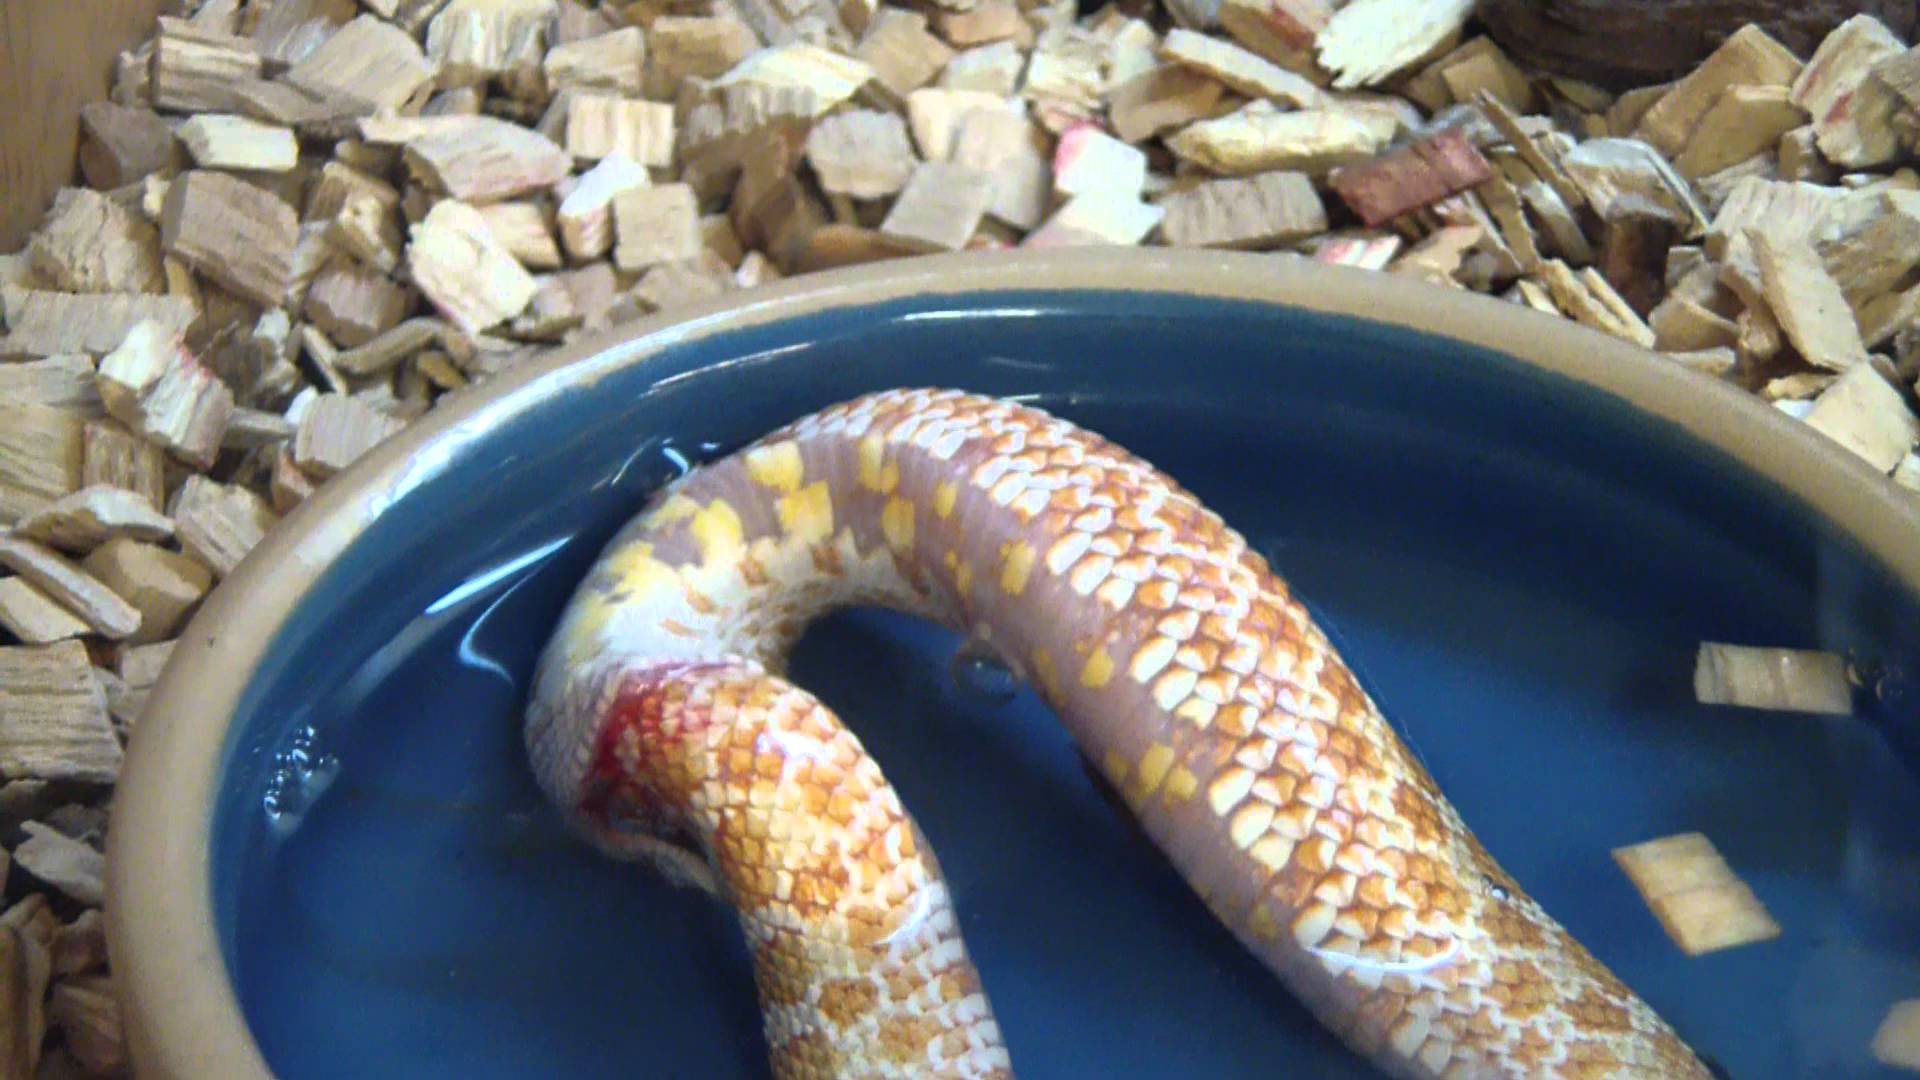 Original) Suicidal Snake eating itself - YouTube